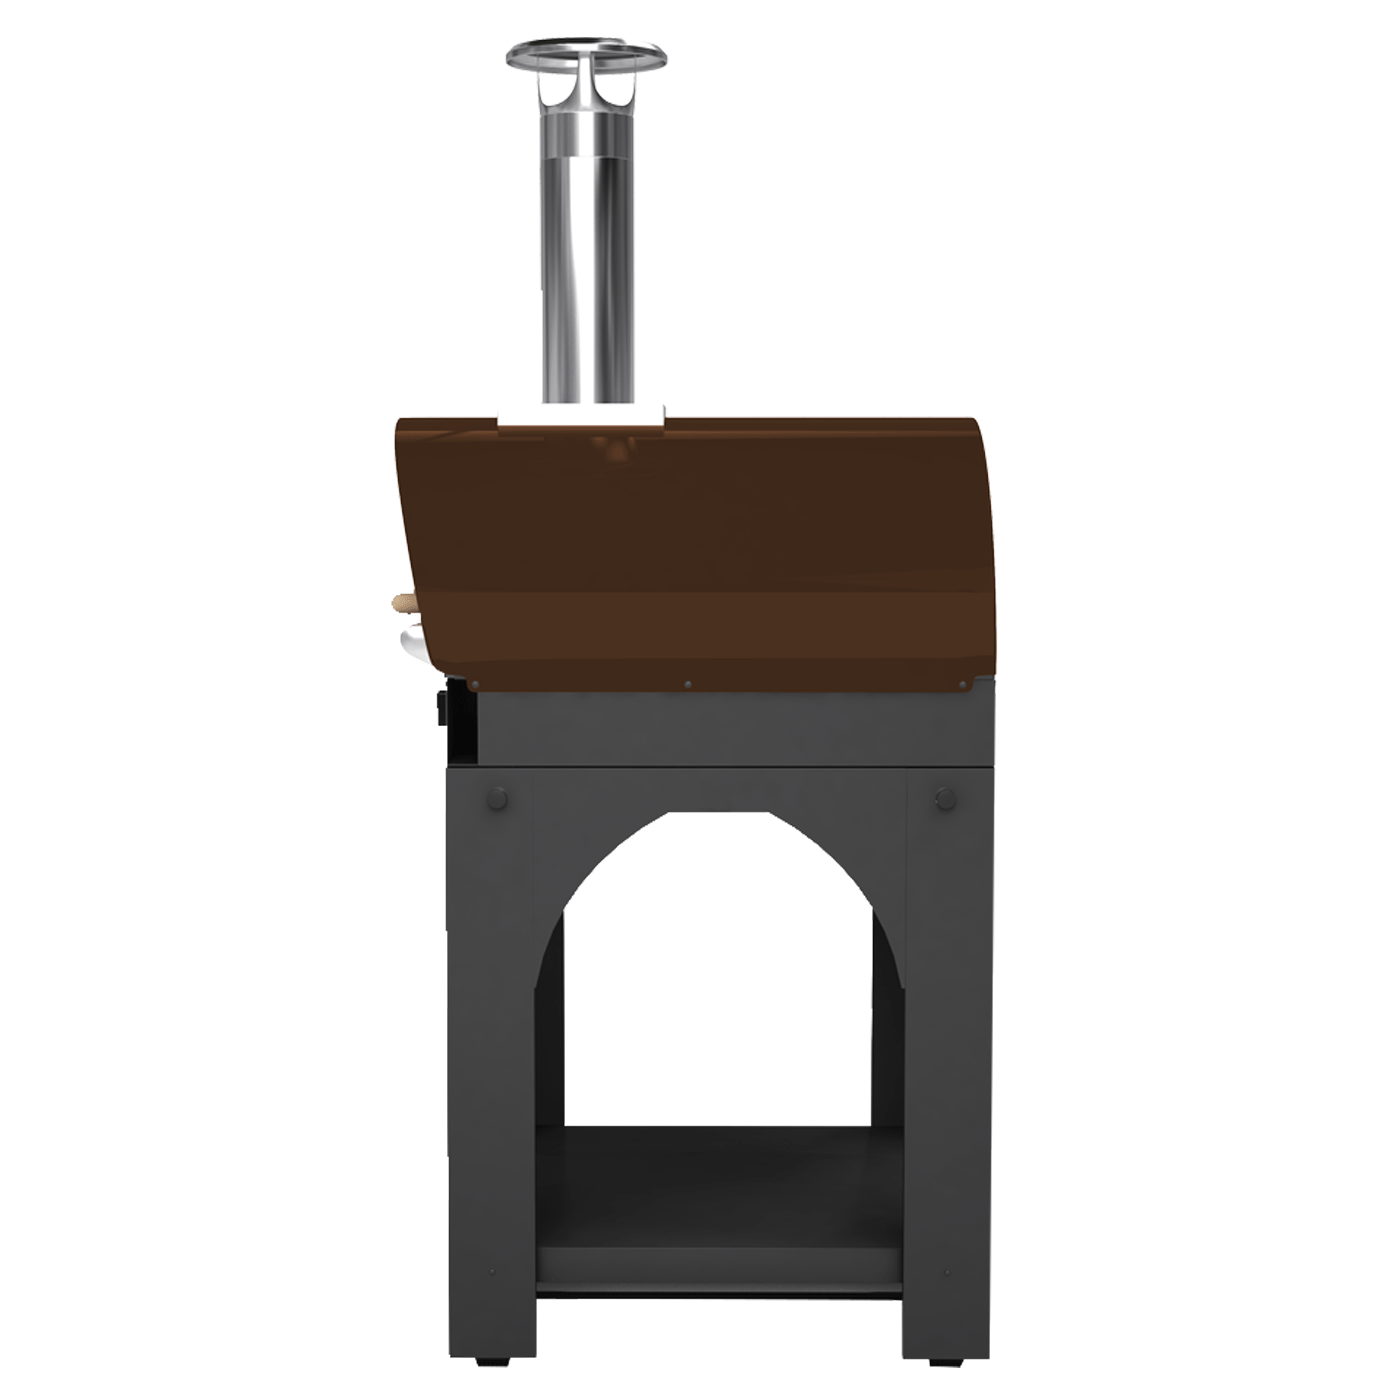 Belforno Piccolo Portable Gas-Fired Pizza Oven - Kitchen King Direct